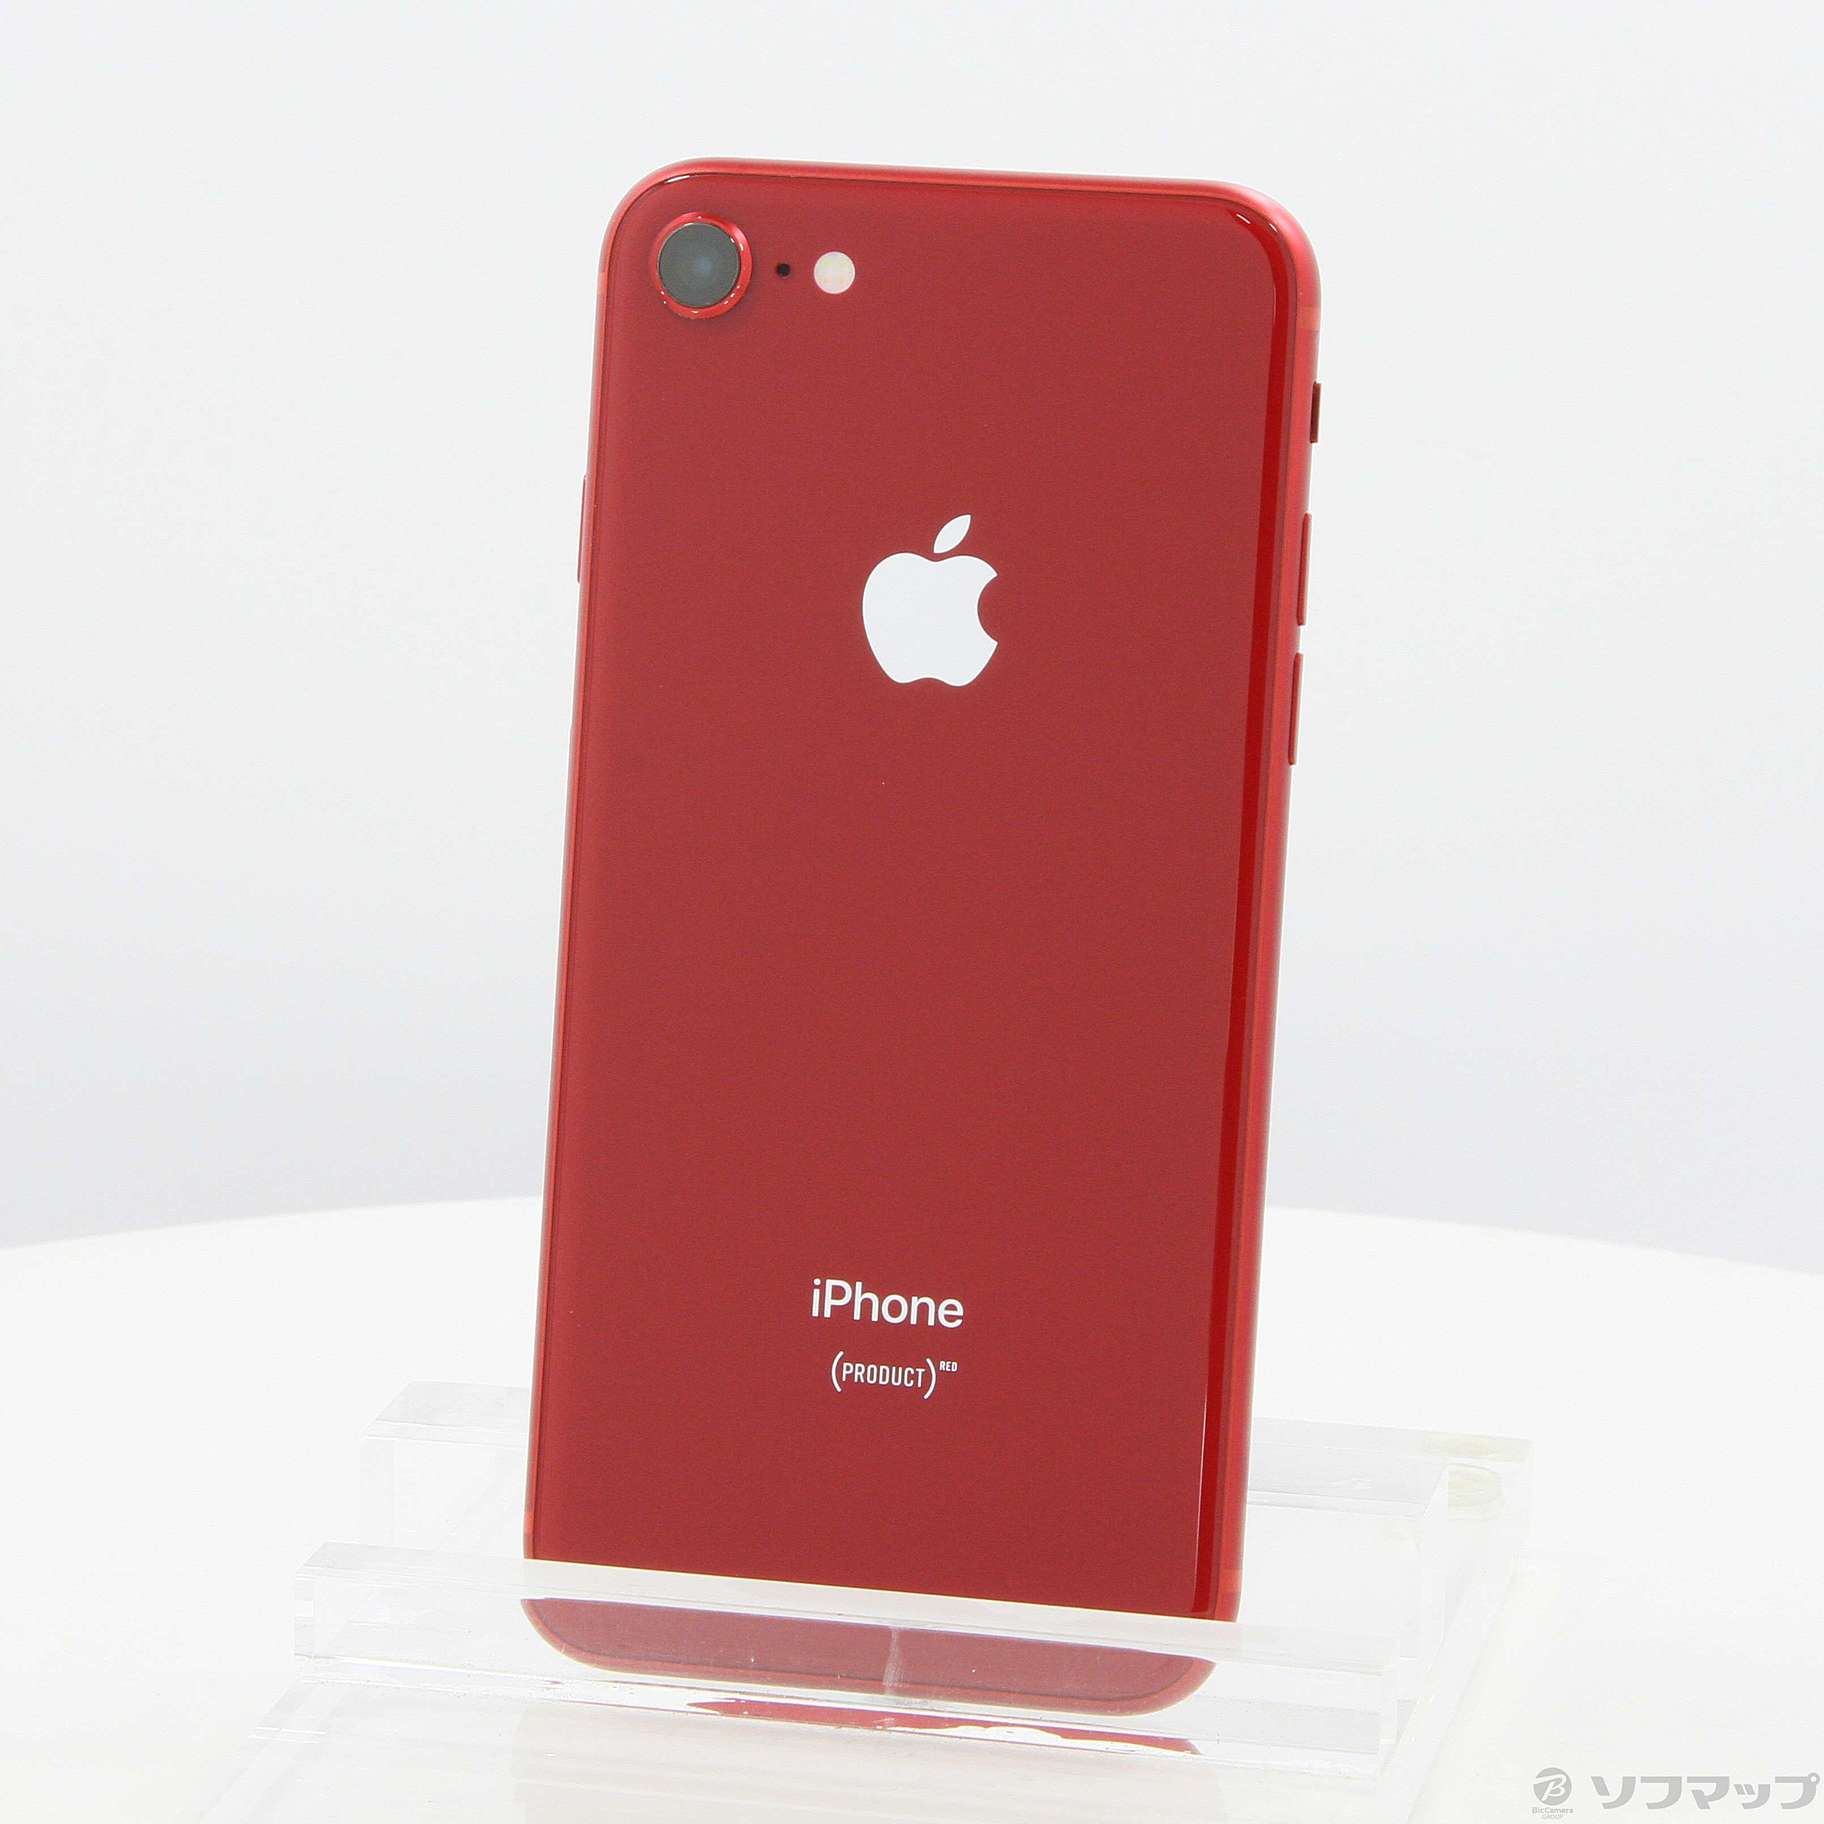 iPhone 8 64GB product red レッド 赤 simフリー - スマートフォン本体